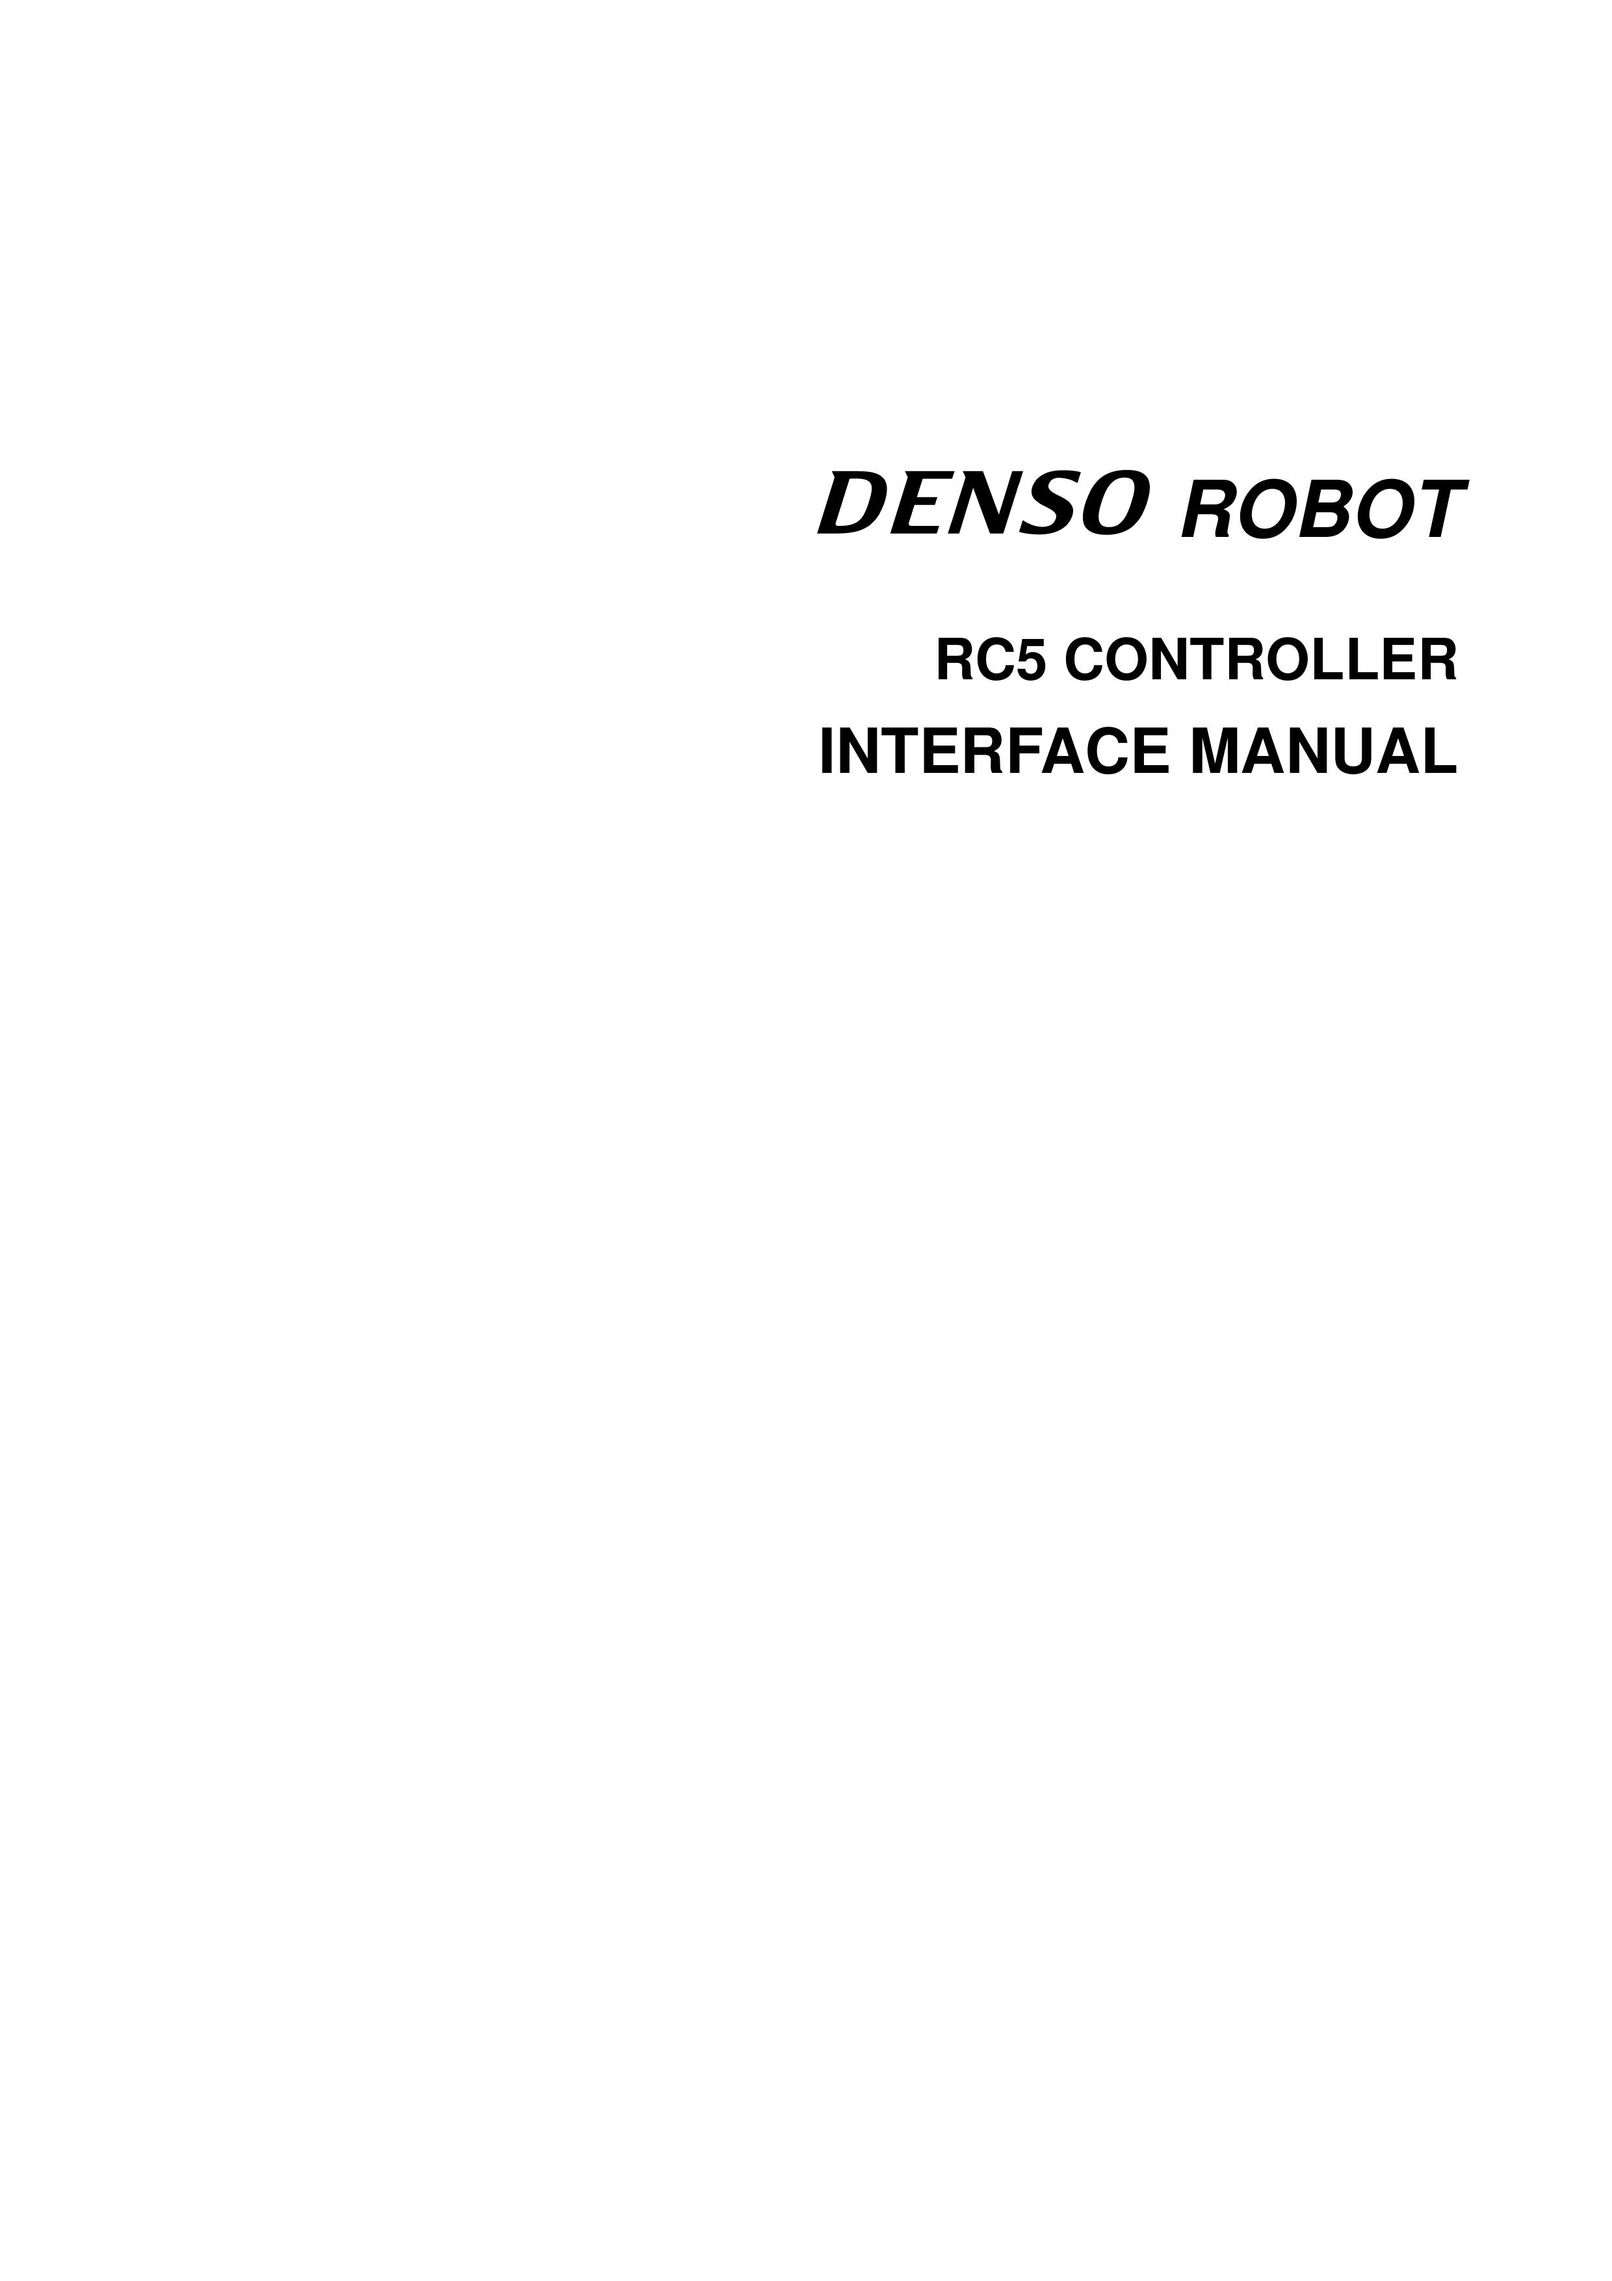 Denso RC5 Robotics User Manual